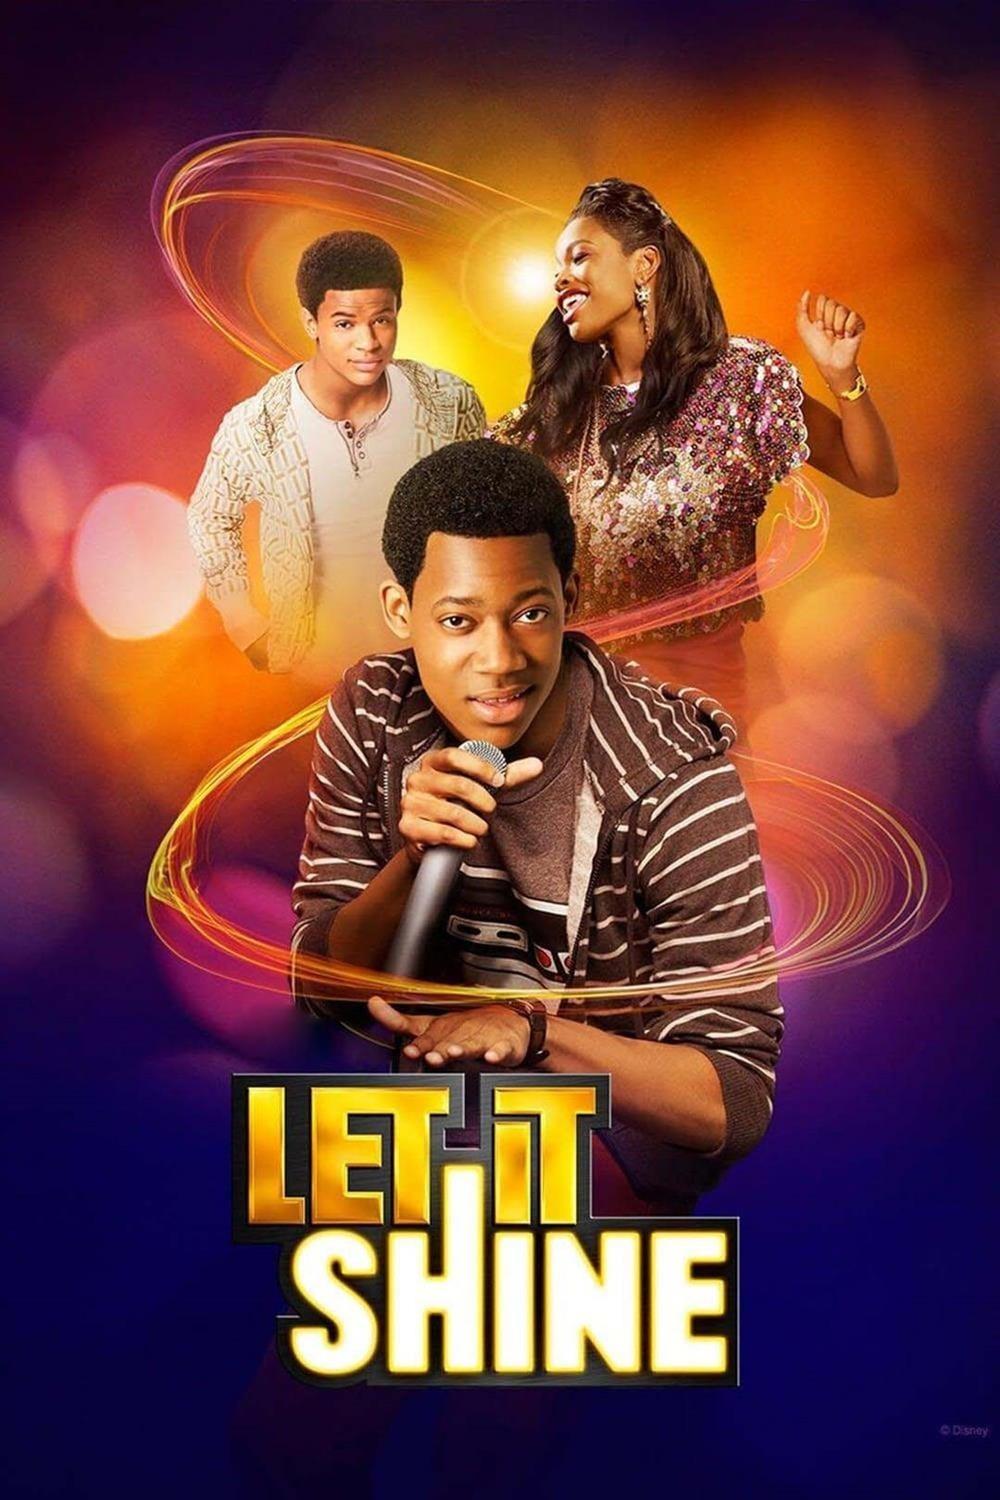 Let It Shine poster